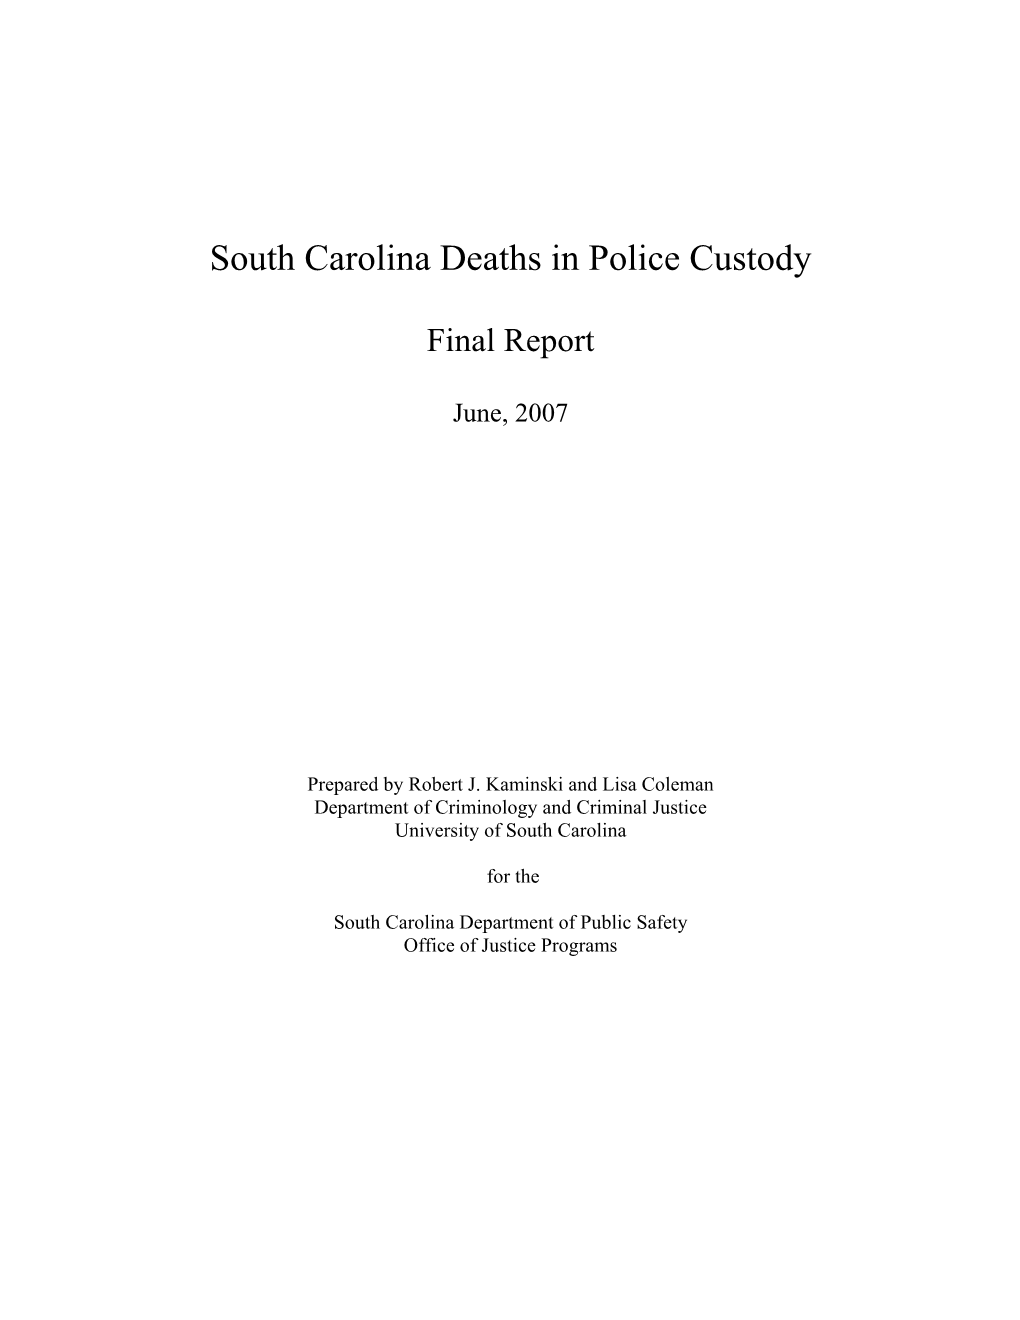 South Carolina Deaths in Police Custody 2006